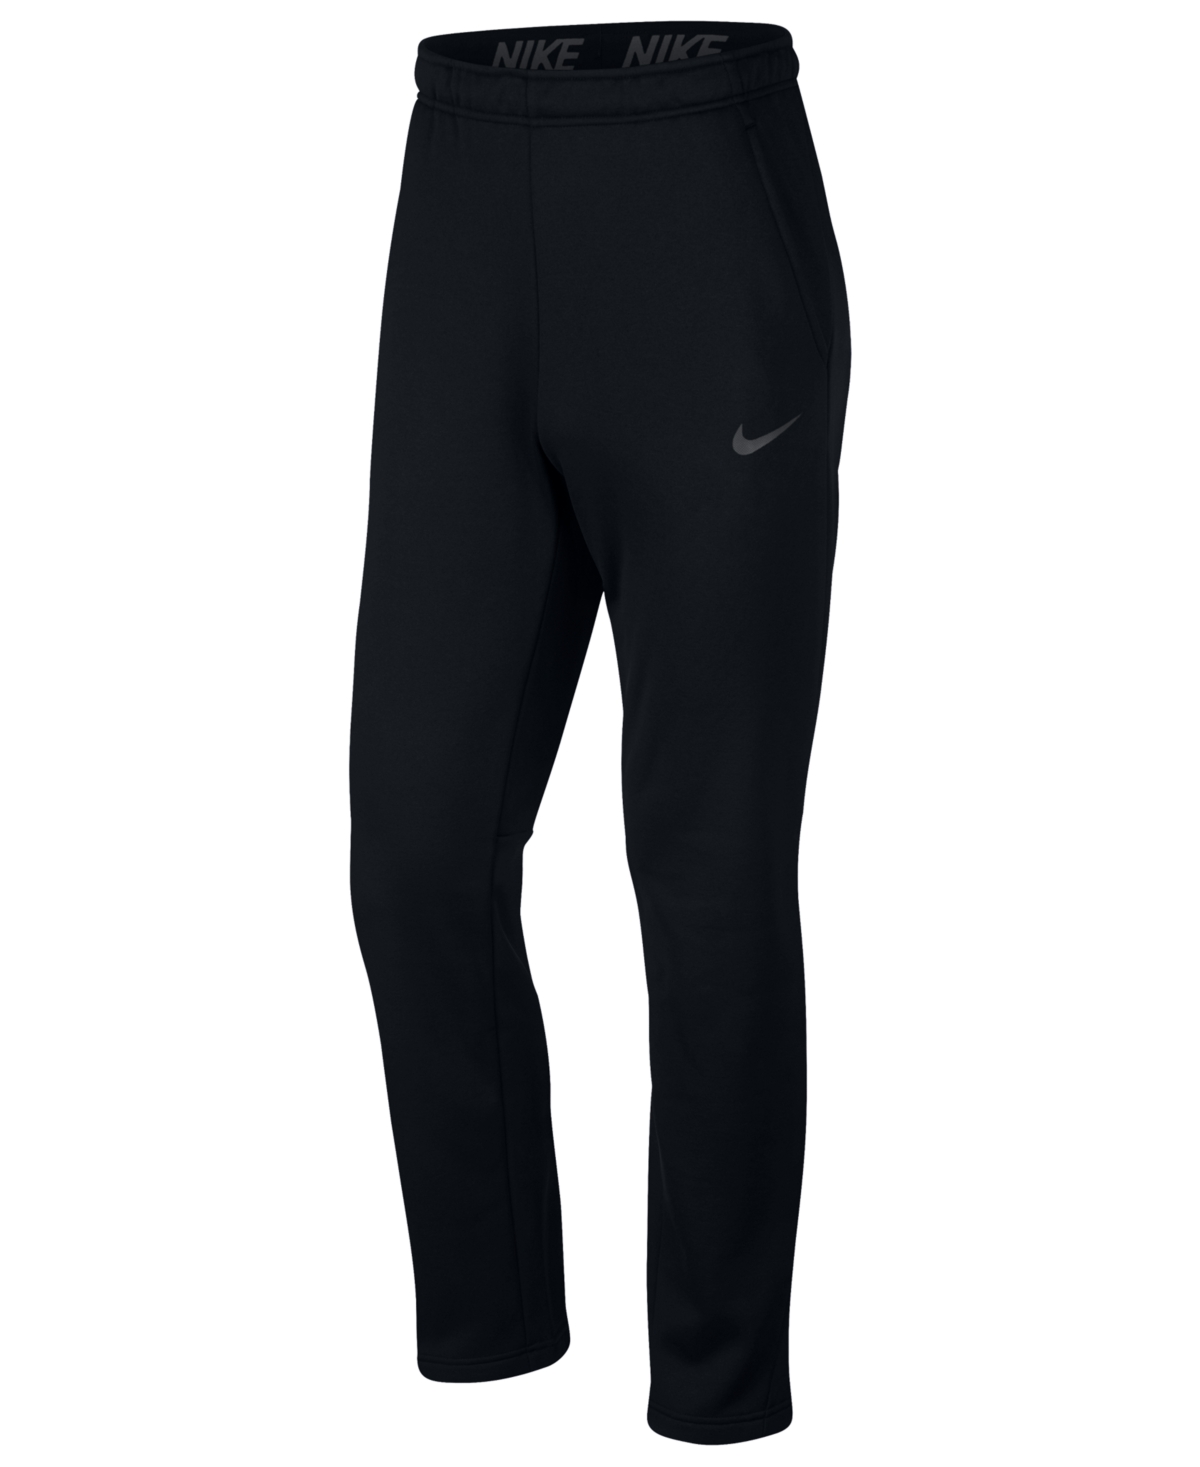 UPC 886668211602 product image for Nike Men's Therma Open Bottom Training Pants | upcitemdb.com